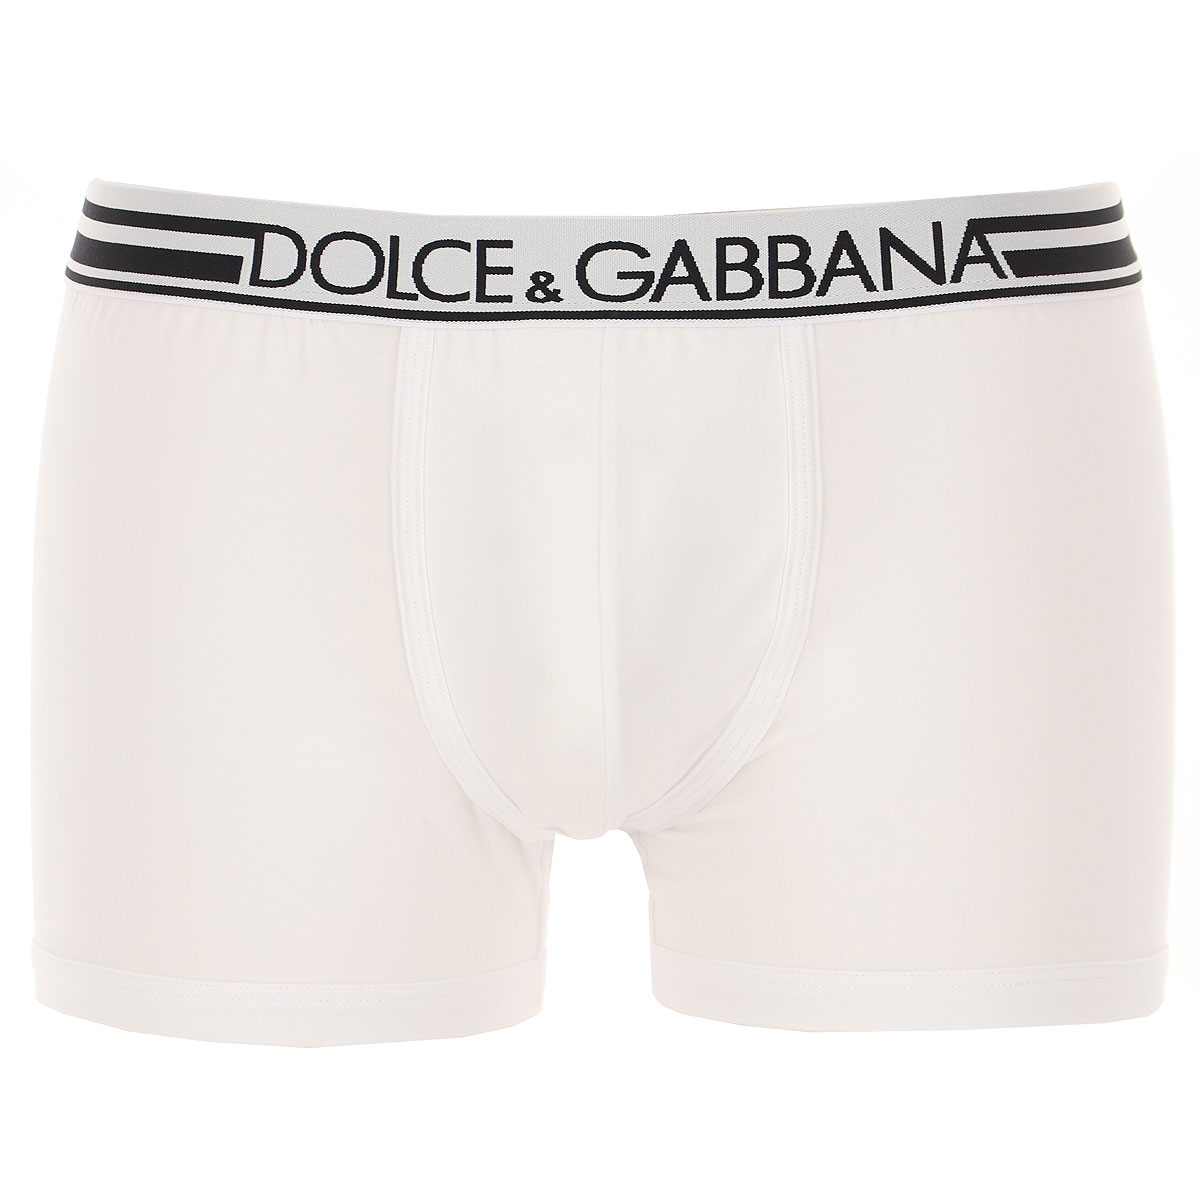 Mens Underwear Dolce & Gabbana, Style code: m4b16j-fuech-w0800